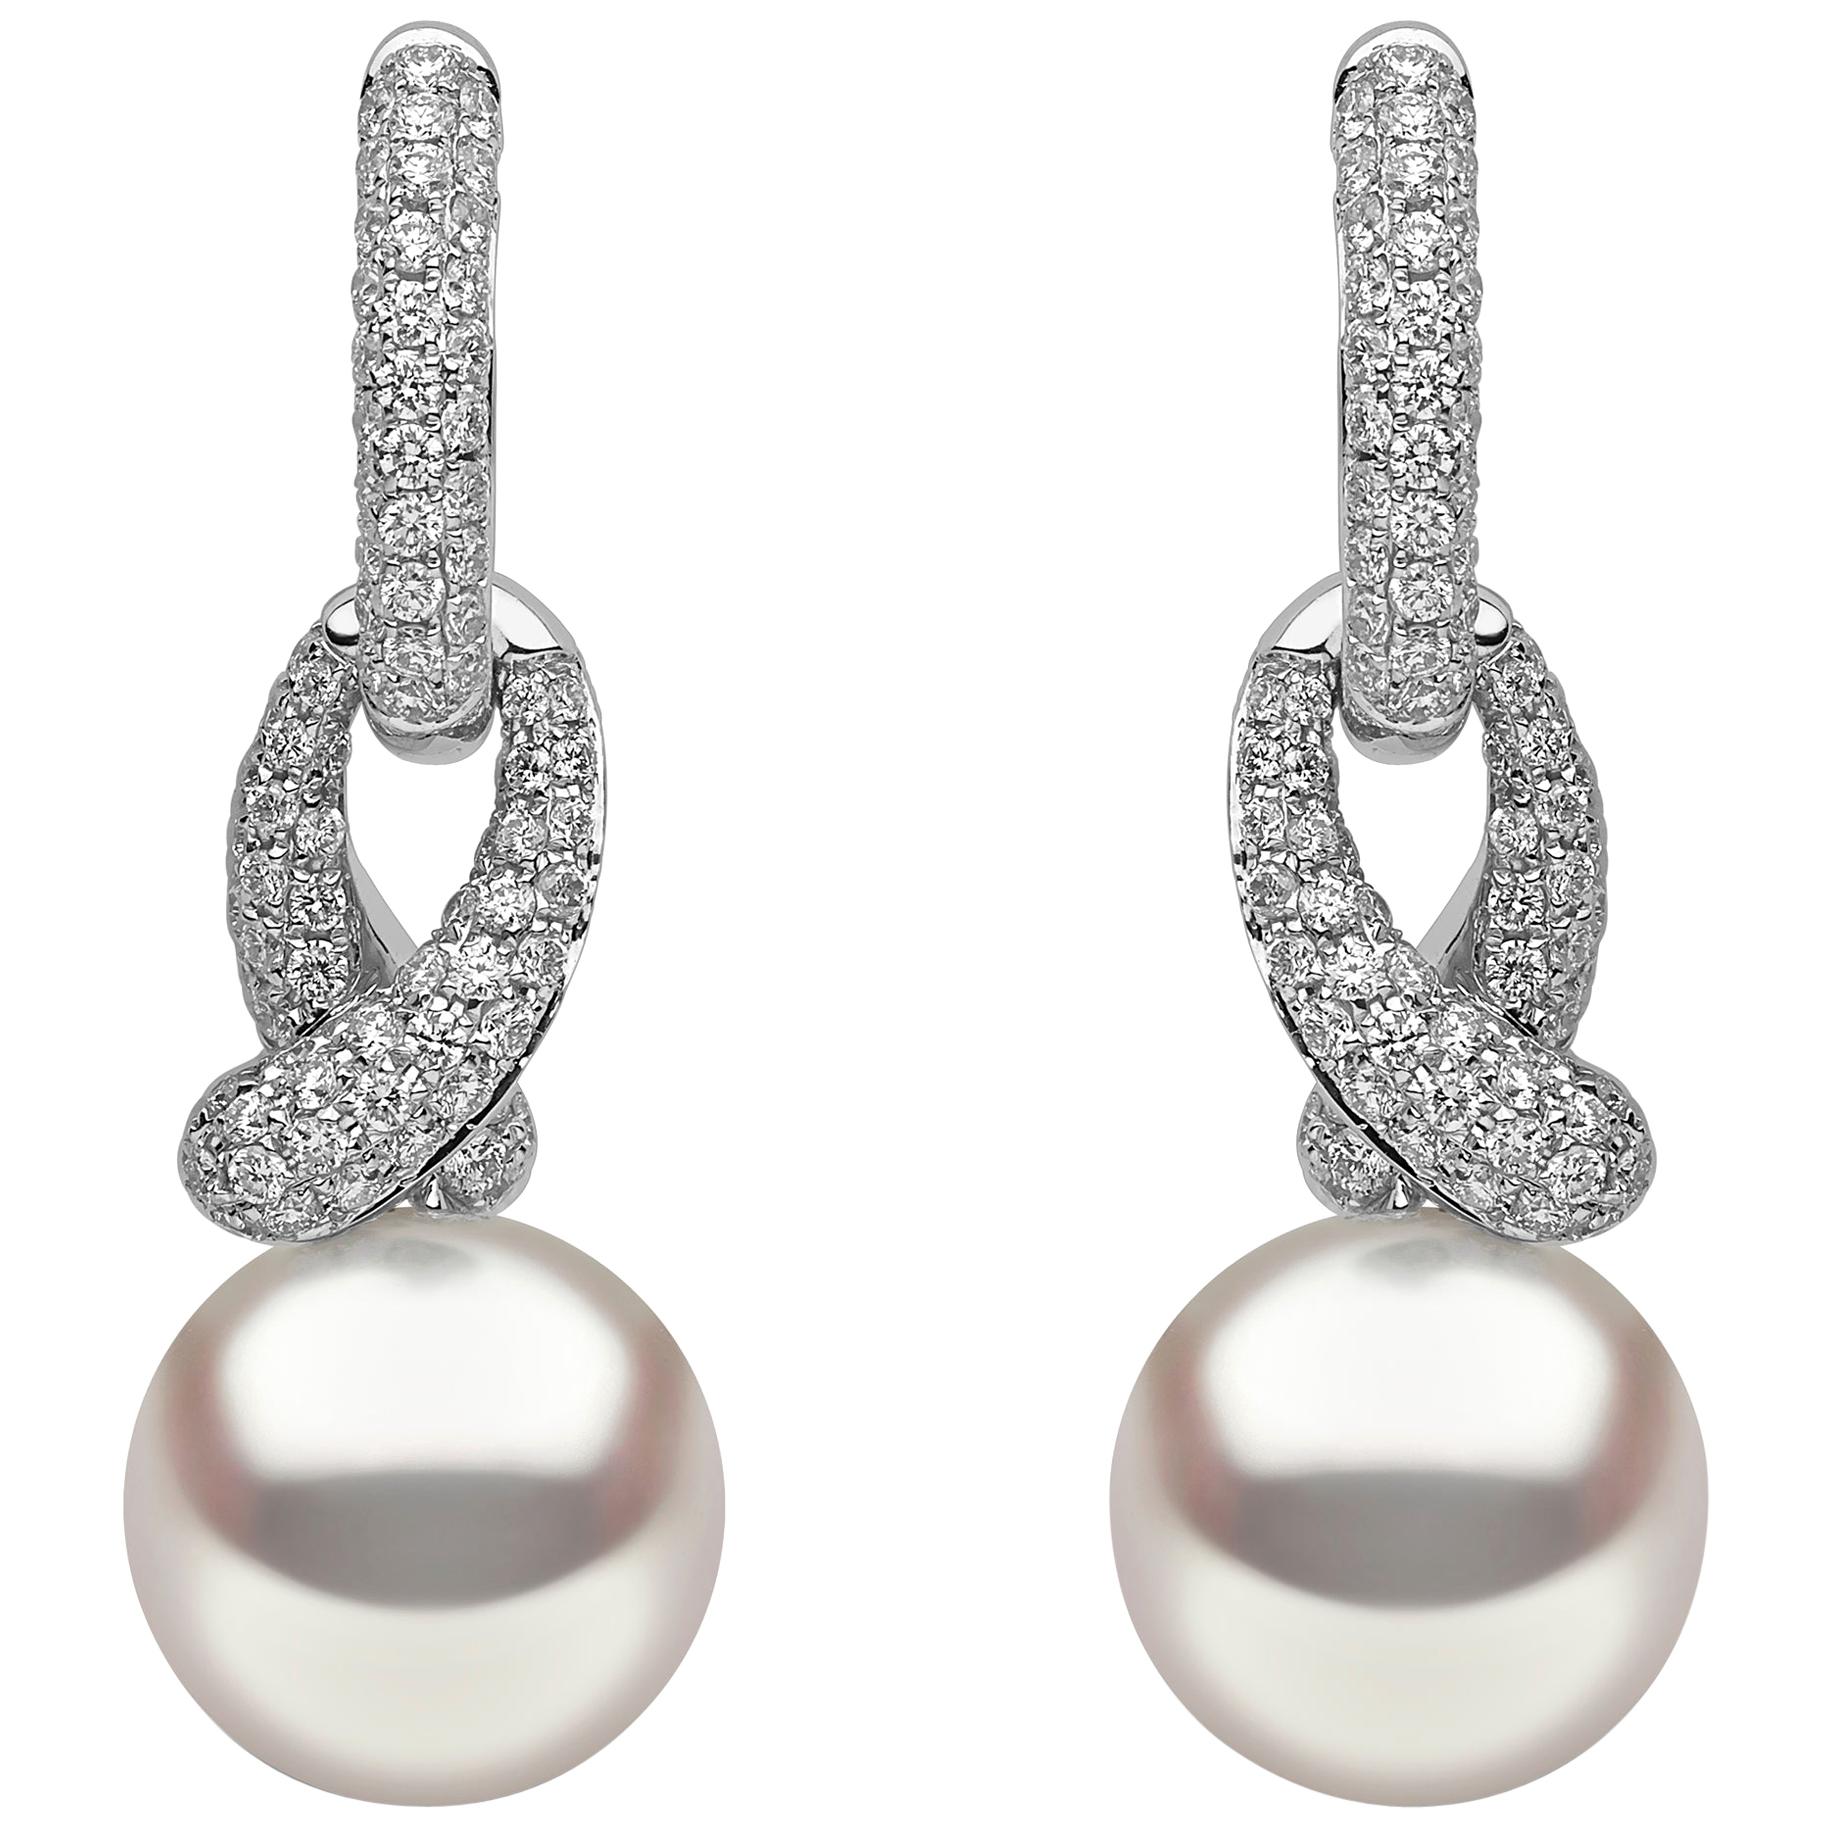 Yoko London South Sea Pearl and Diamond Hoop Earrings in 18 Karat White Gold